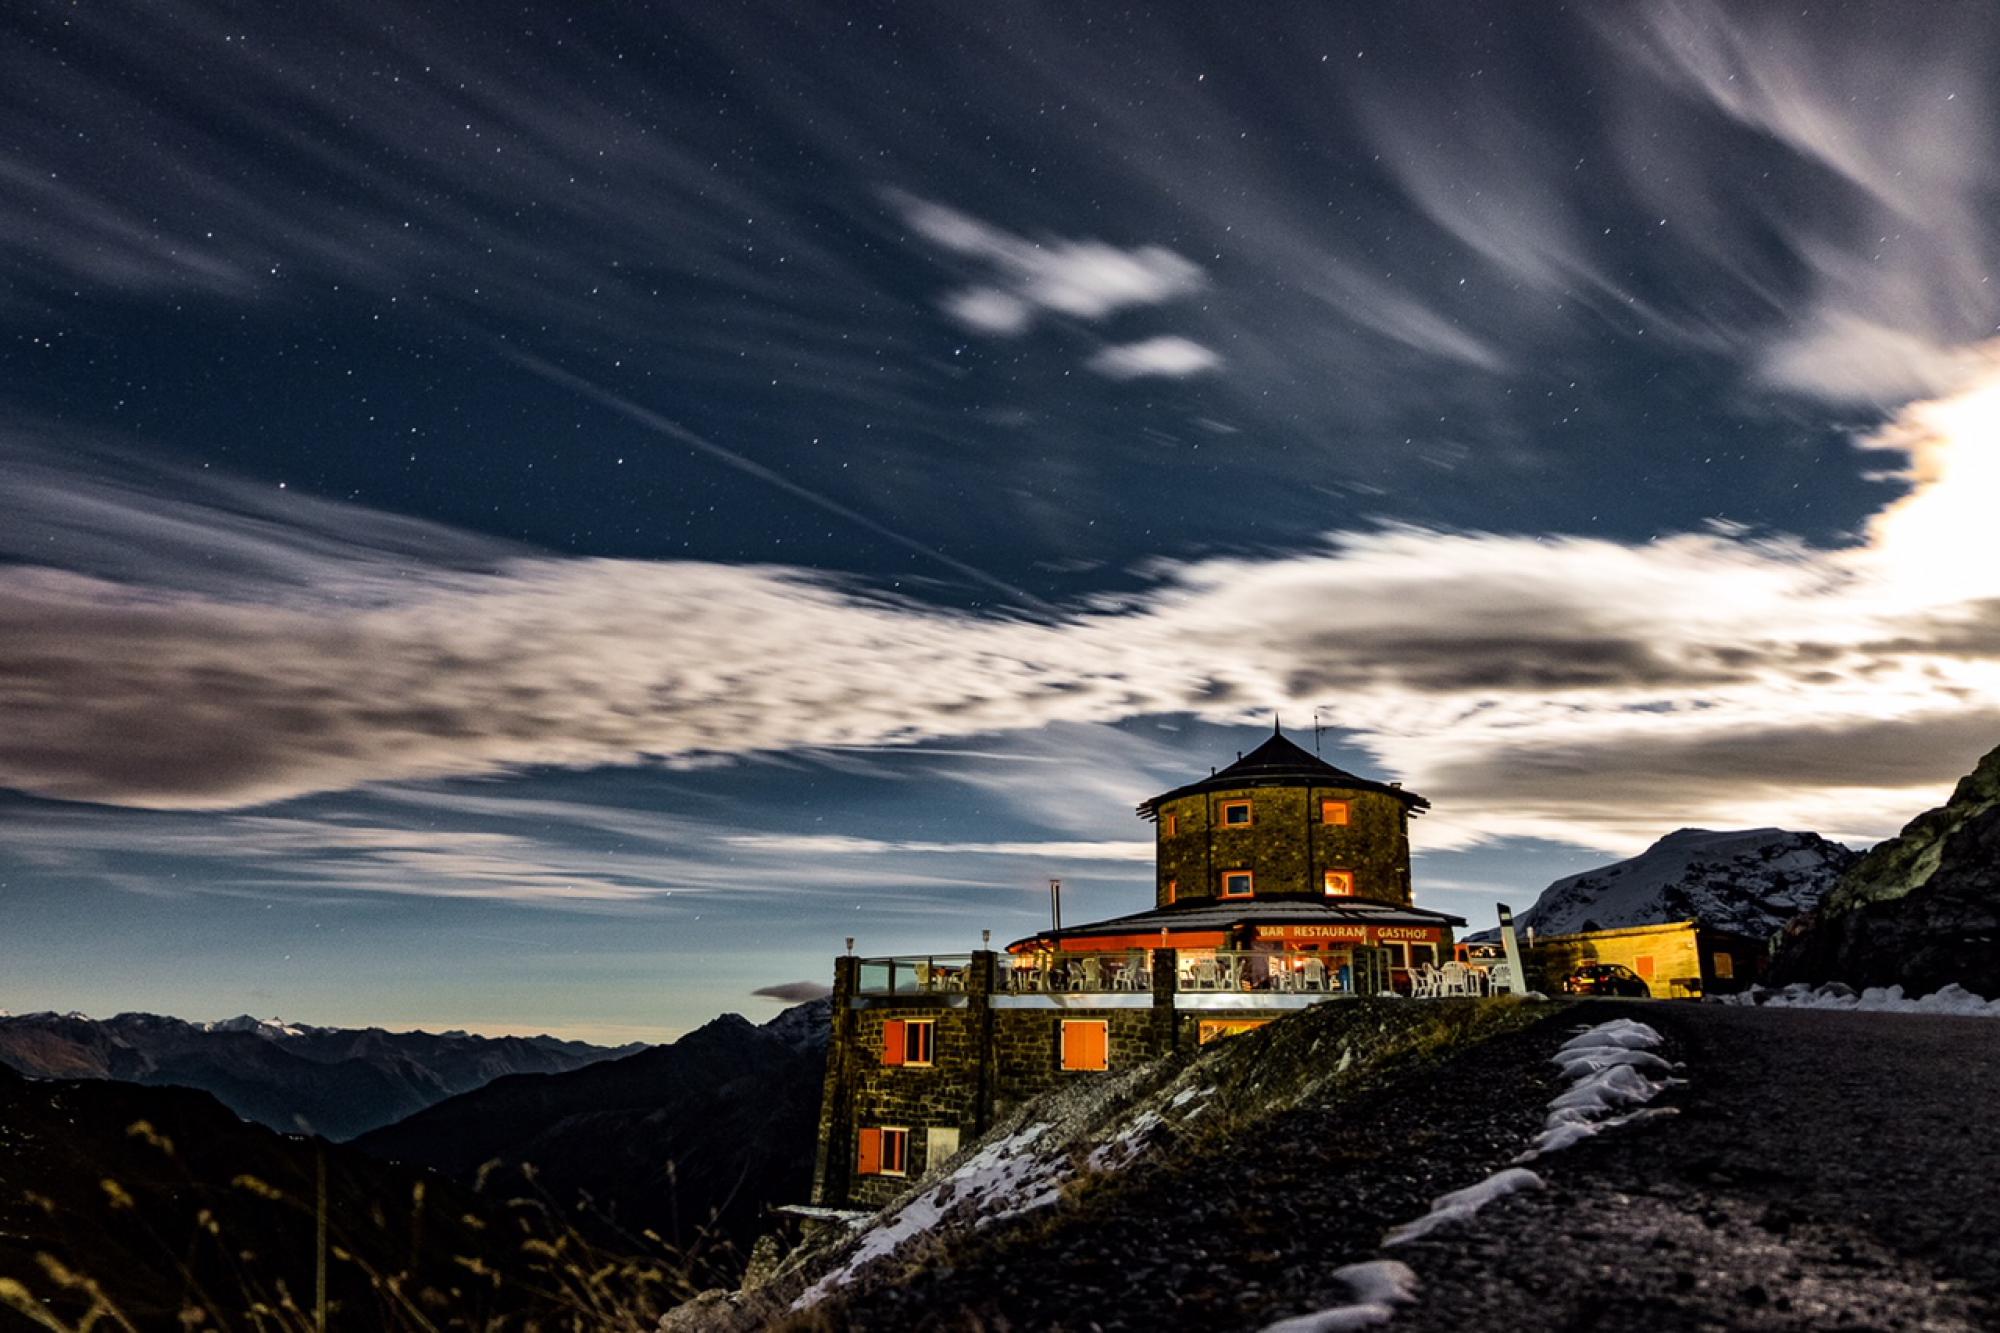 Alpine Hotel Tibet in Stelvio